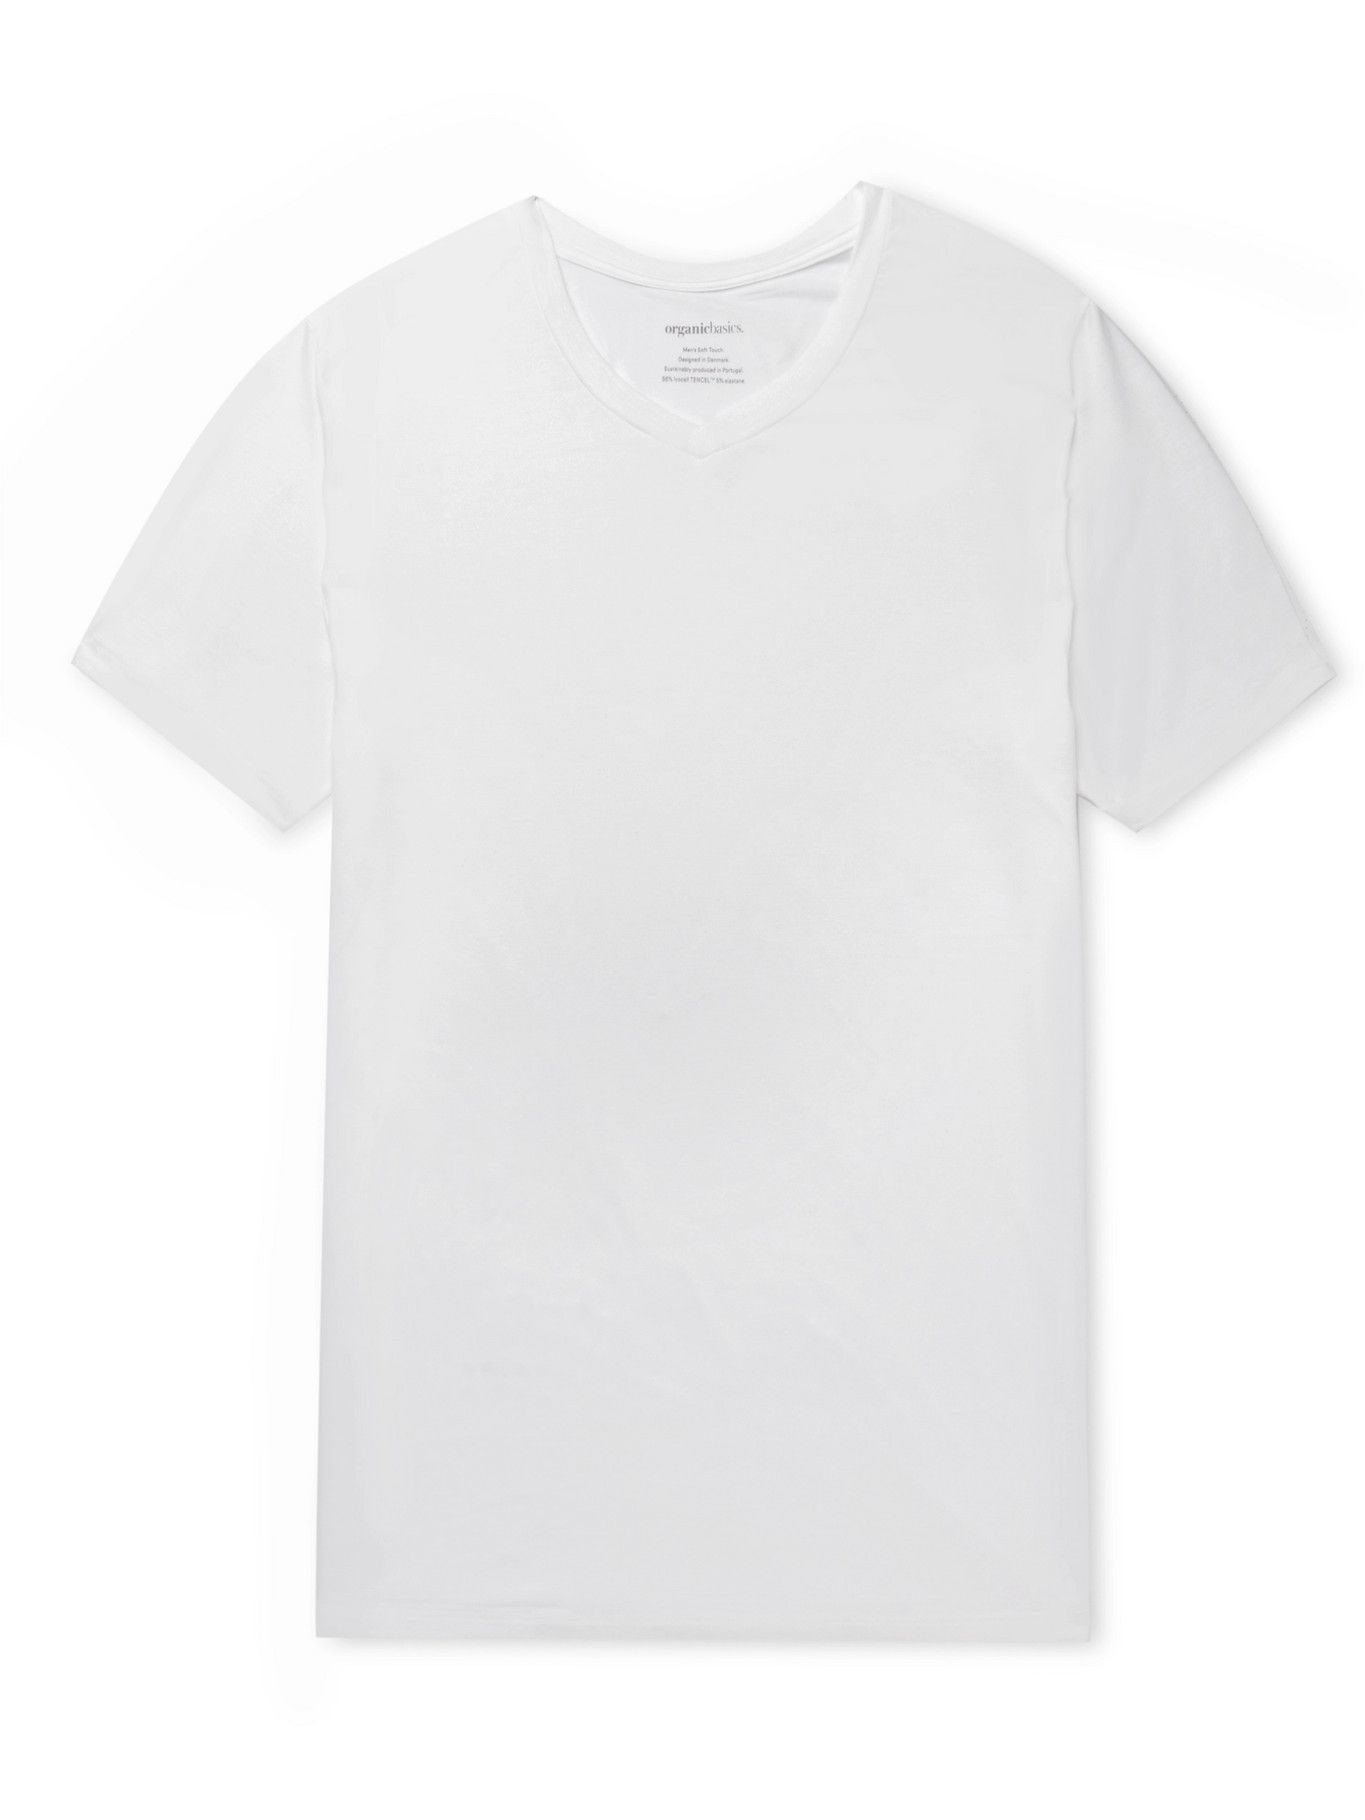 ORGANIC BASICS - Slim-Fit Stretch TENCEL Lyocell T-Shirt - White ...